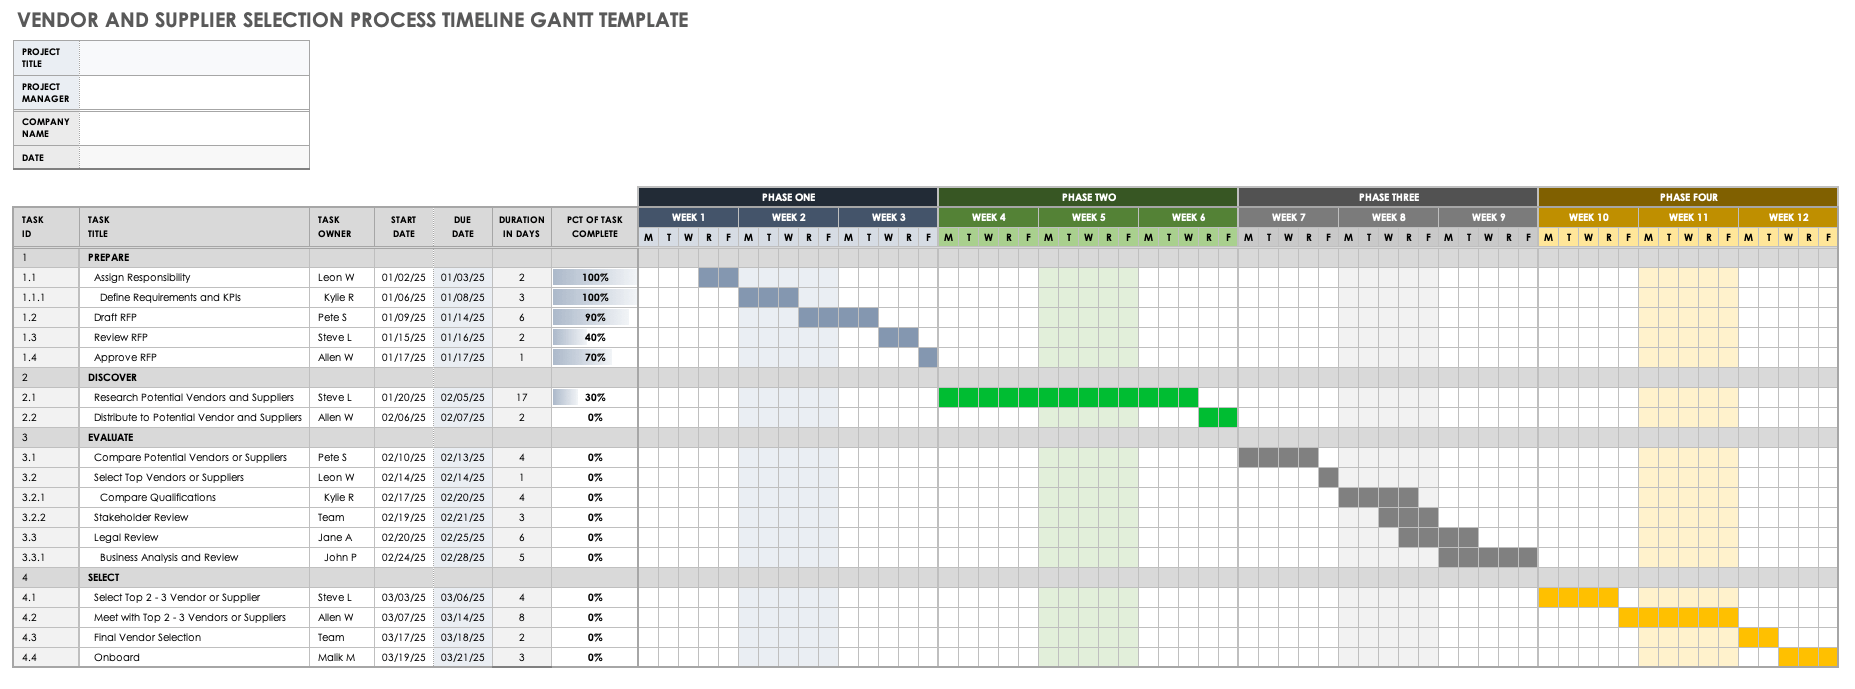 Vendor and Supplier Selection Process Timeline Gantt Template